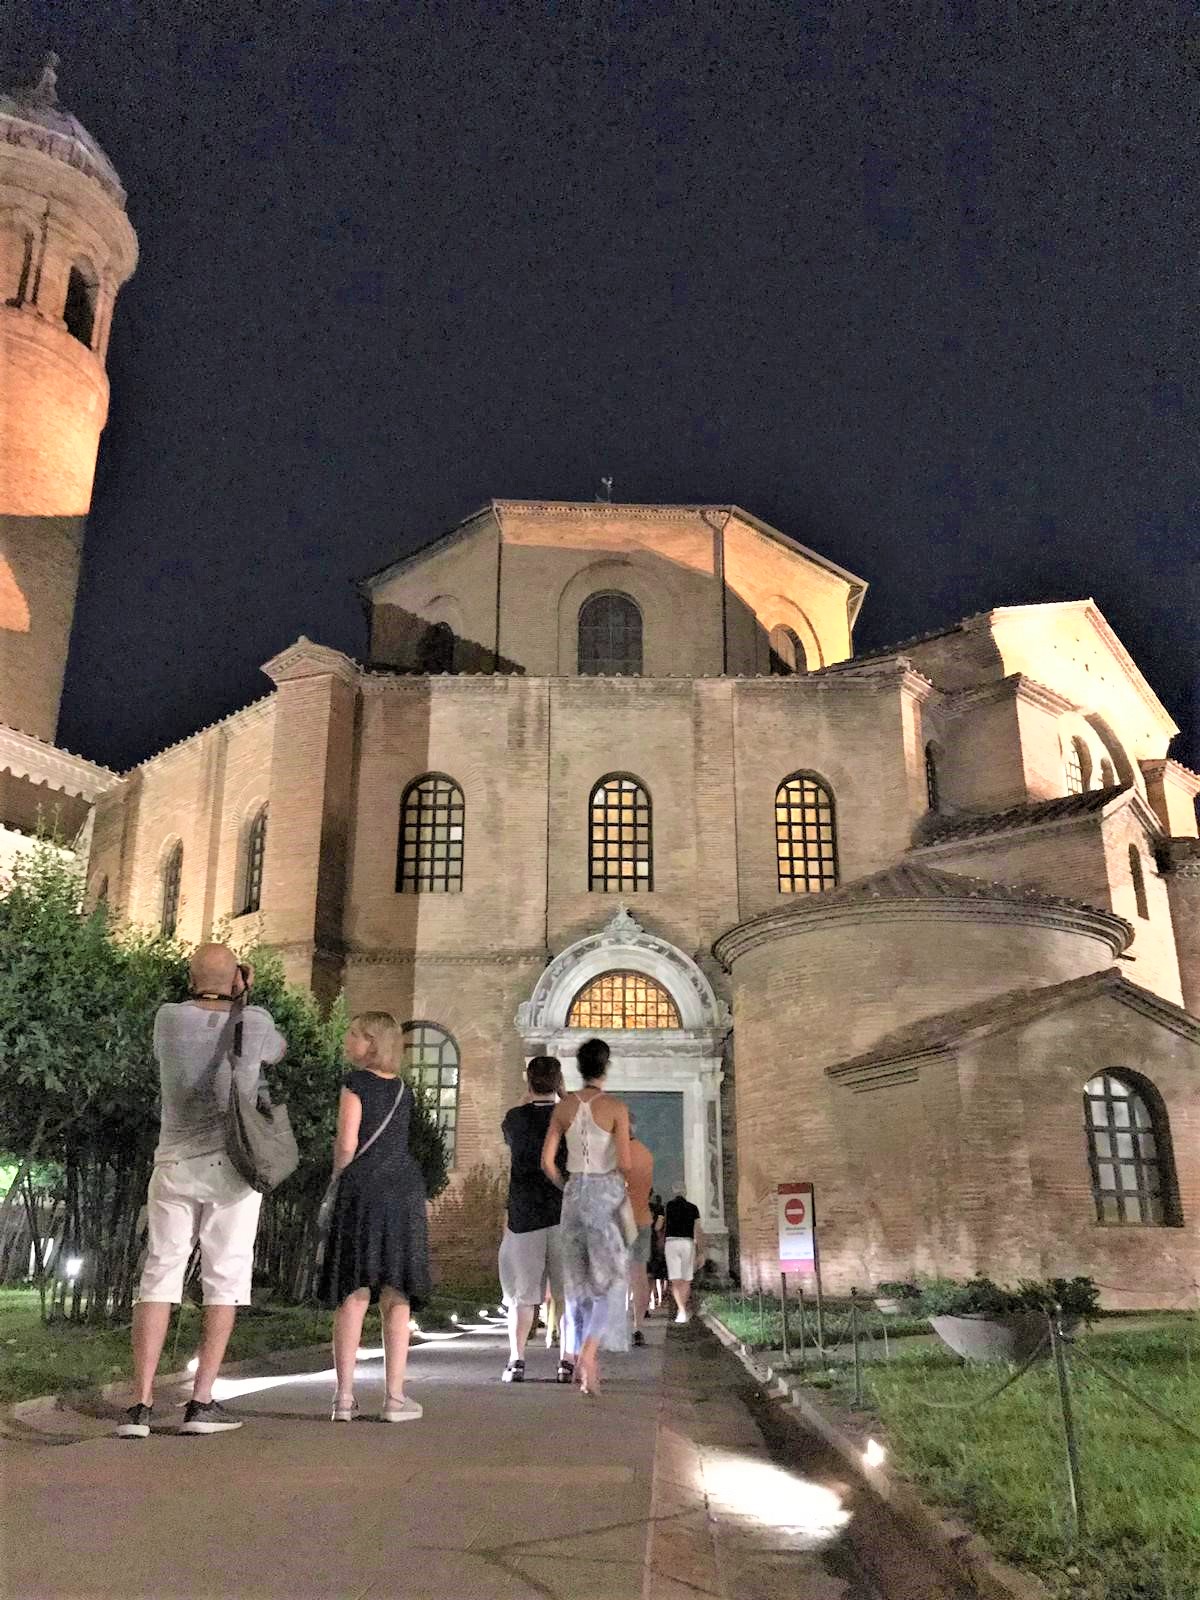 Incoming Ravenna visite di notte